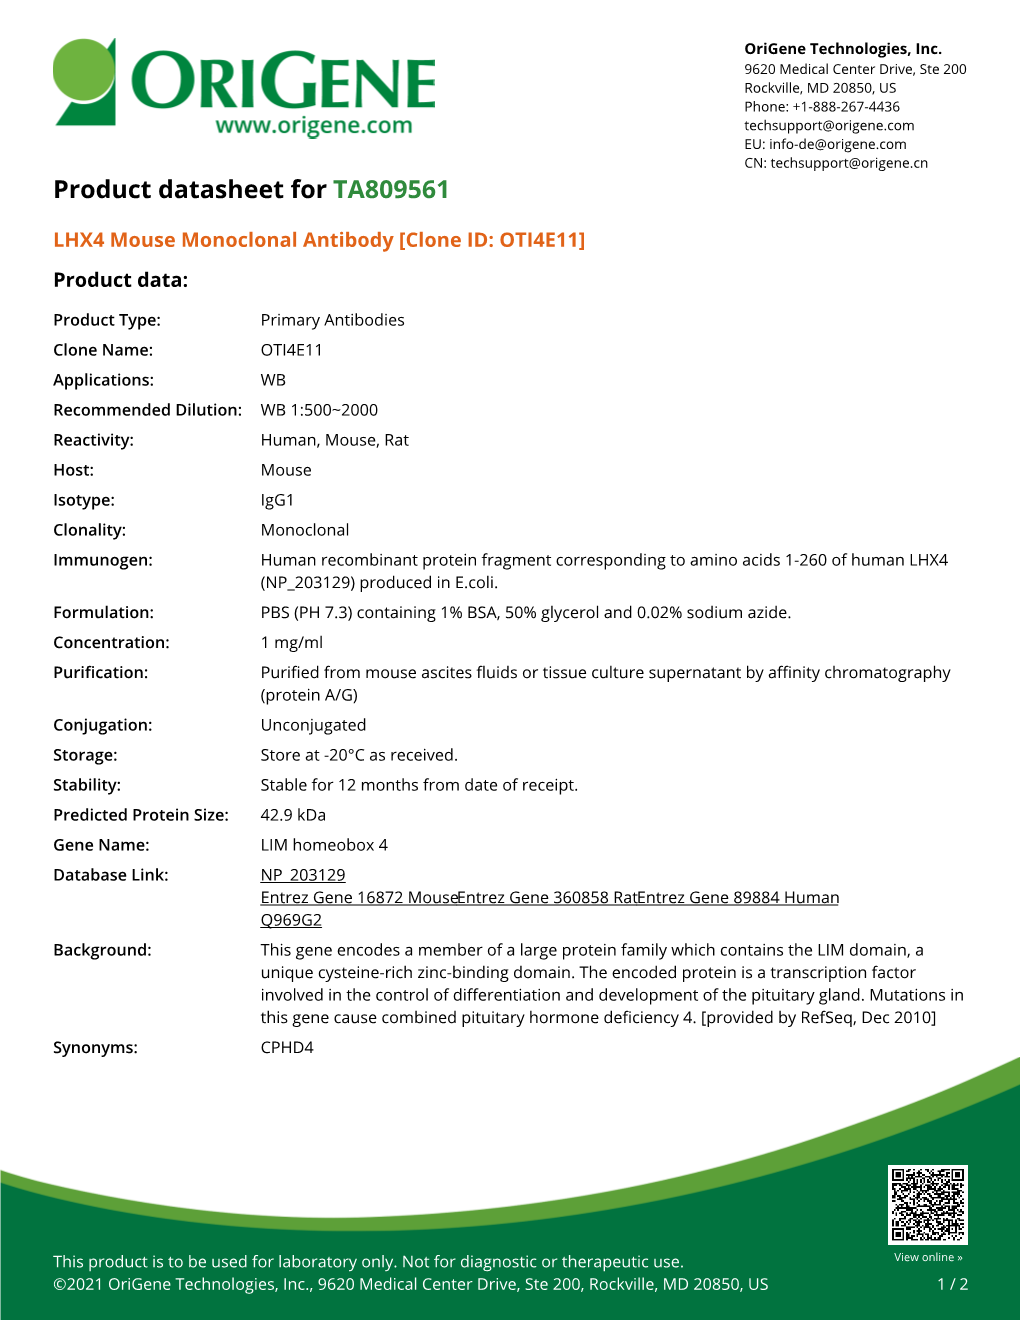 LHX4 Mouse Monoclonal Antibody [Clone ID: OTI4E11] – TA809561